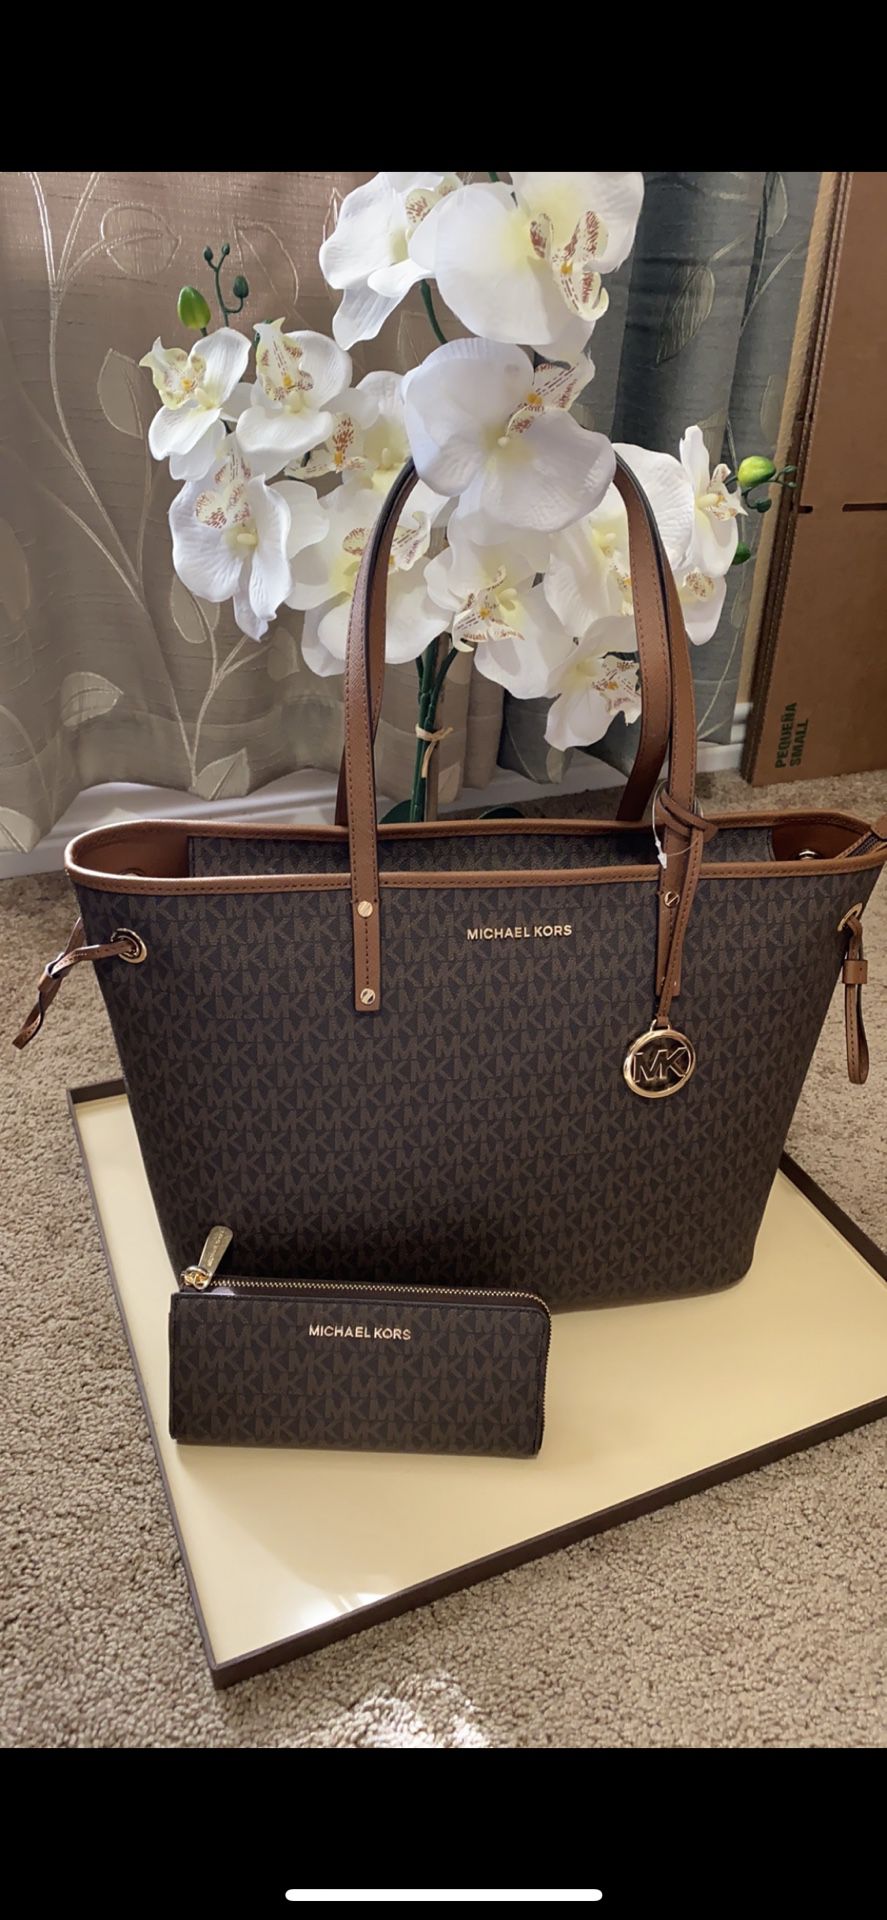 Michael Kors handbag tote purse bag with matching wallet set new with tags